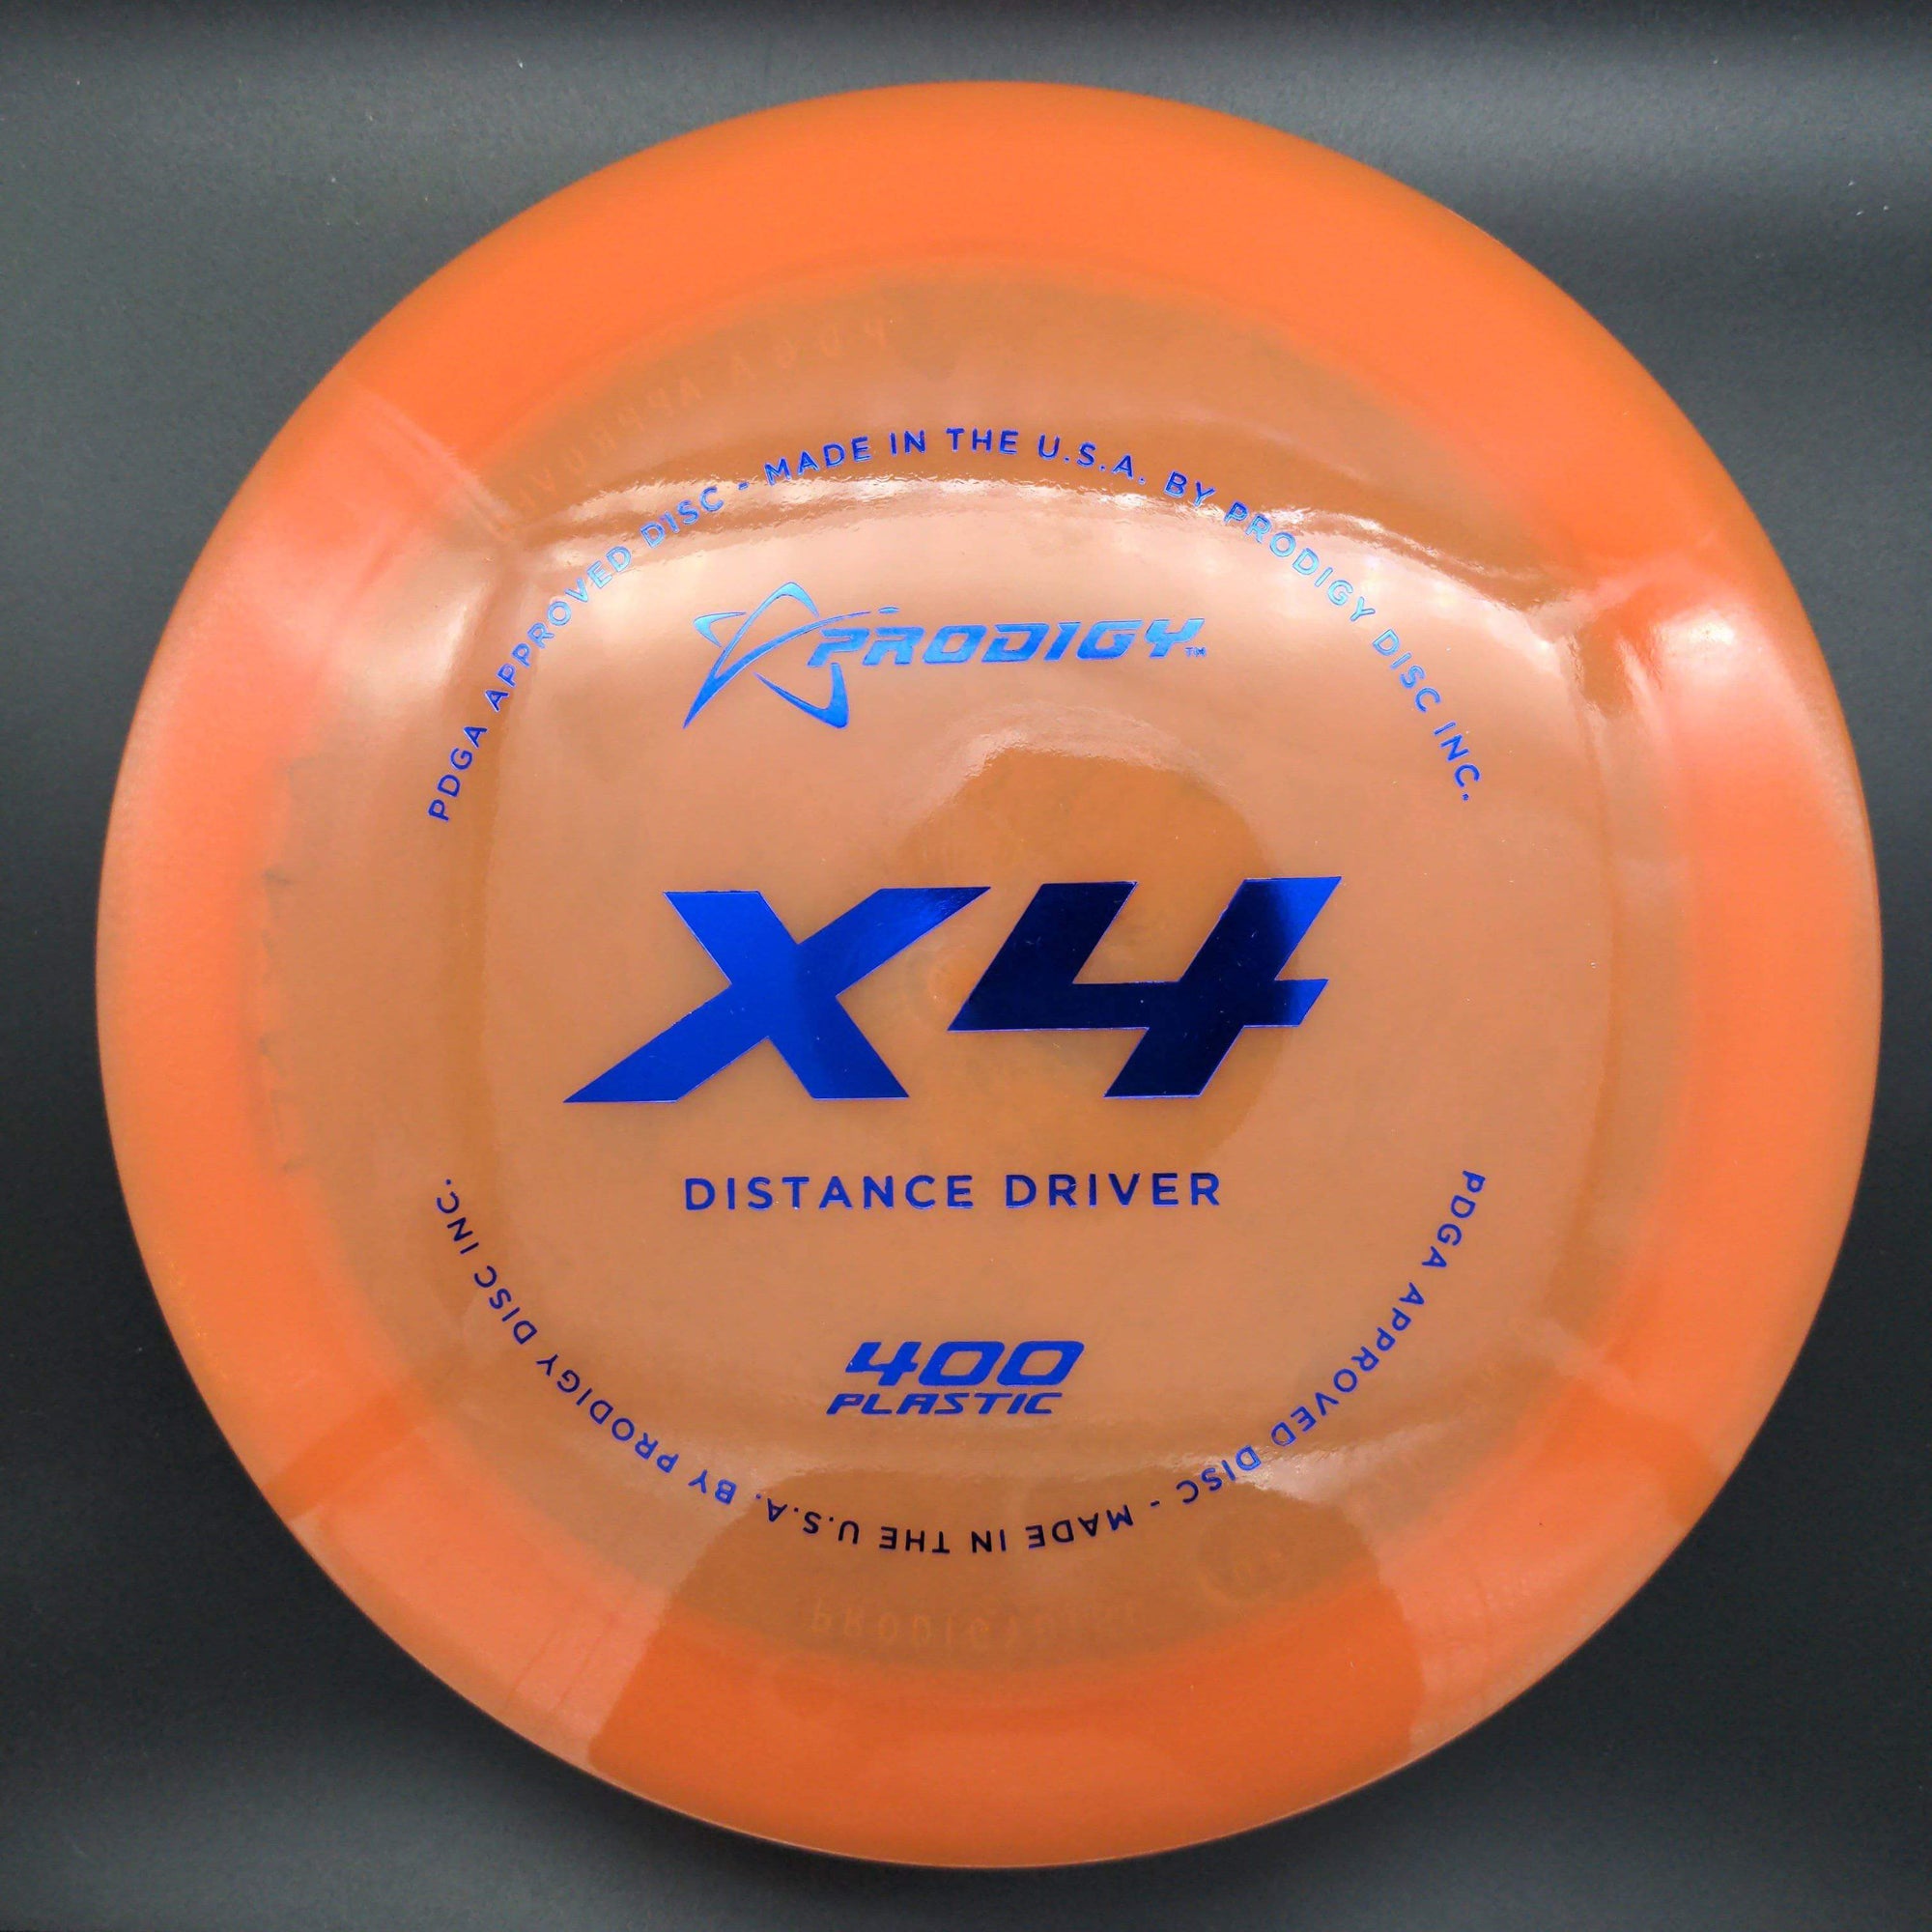 Prodigy Distance Driver X4 400 Plastic